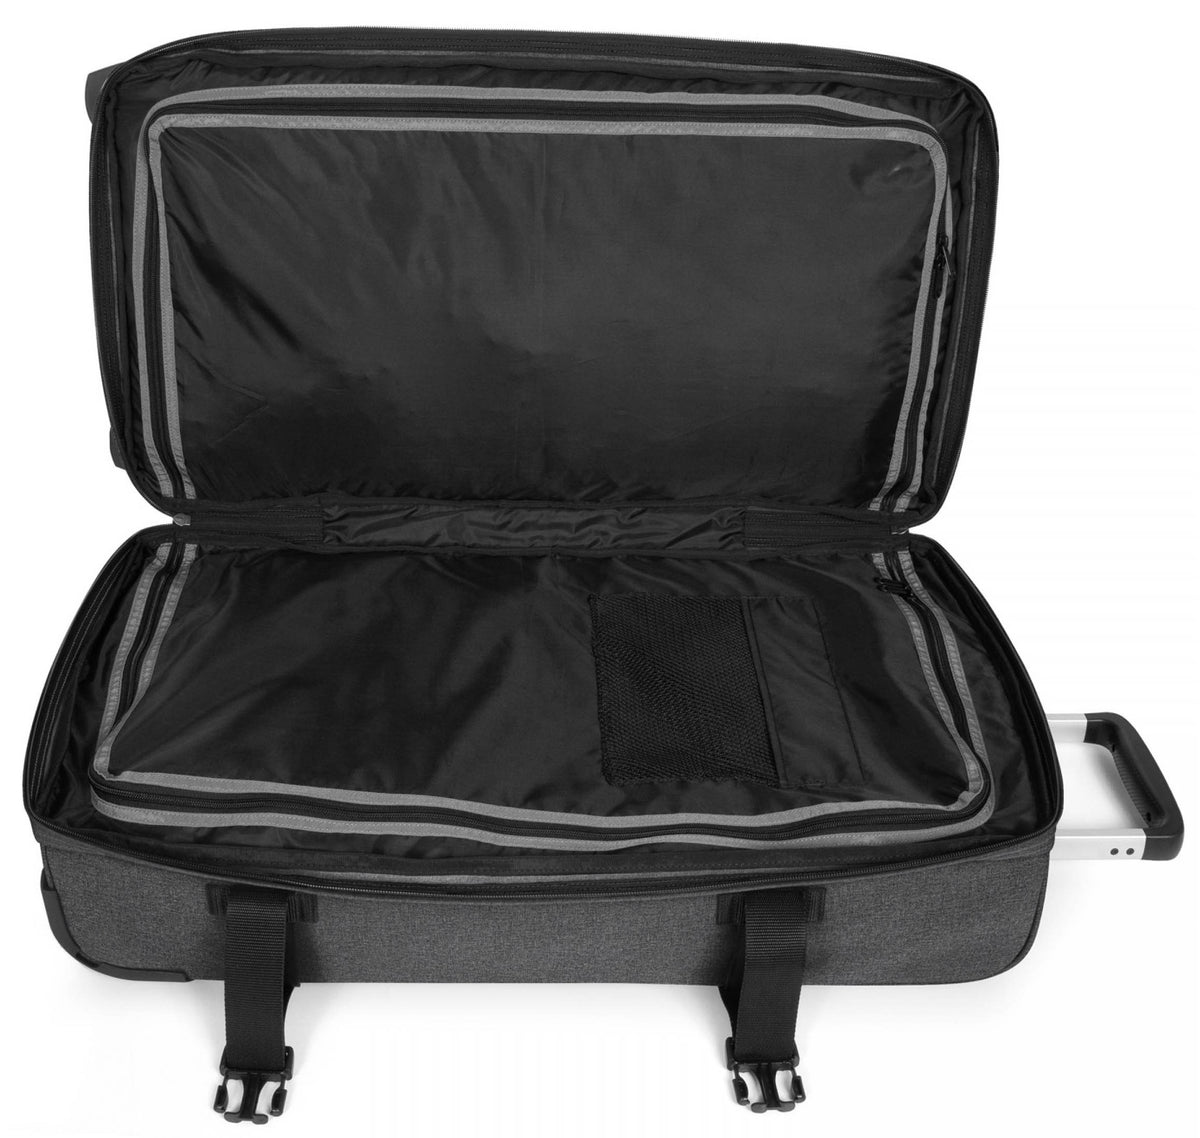 Eastpak Transit'R L Suitcase - Black Denim